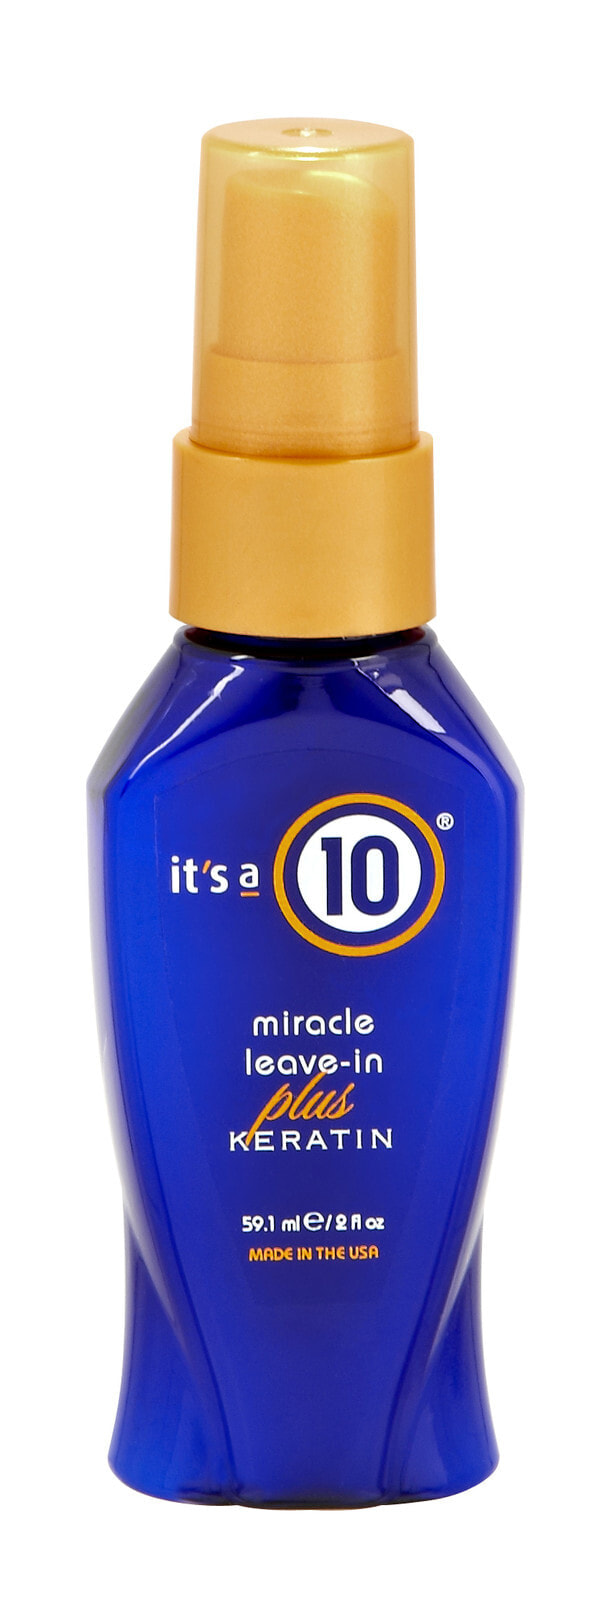 It's A 10 Miracle Leave-In Conditioner Plus Keratin Несмываемый кондиционер для волос с кератином